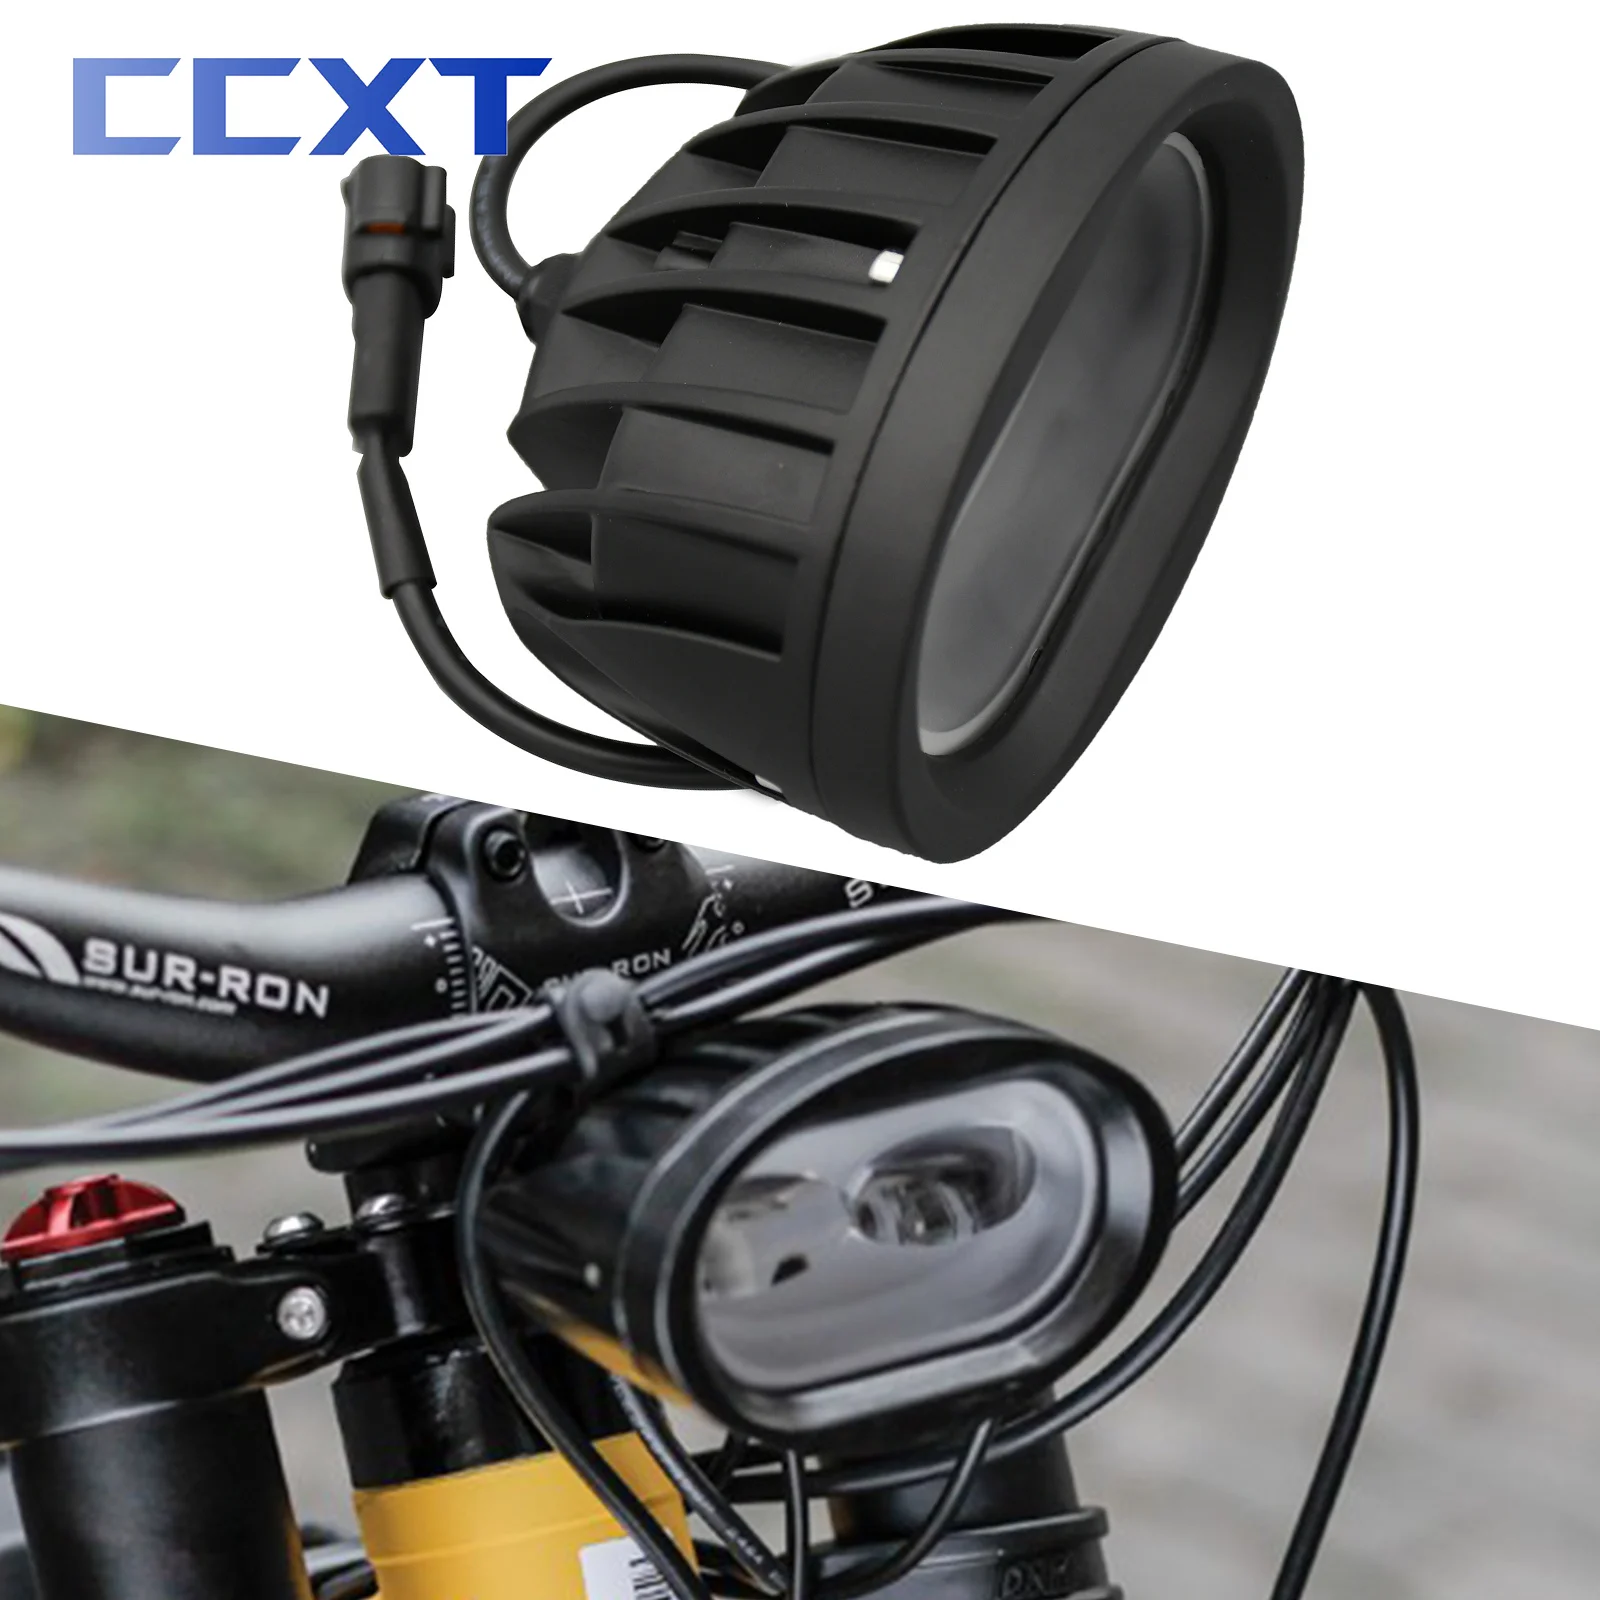 

Motorcycle LED Front Head Light Headlight Bracket For Sur-Ron Surron Light Bee S & X For Segway X260 X160 Dirt Bike Motocross